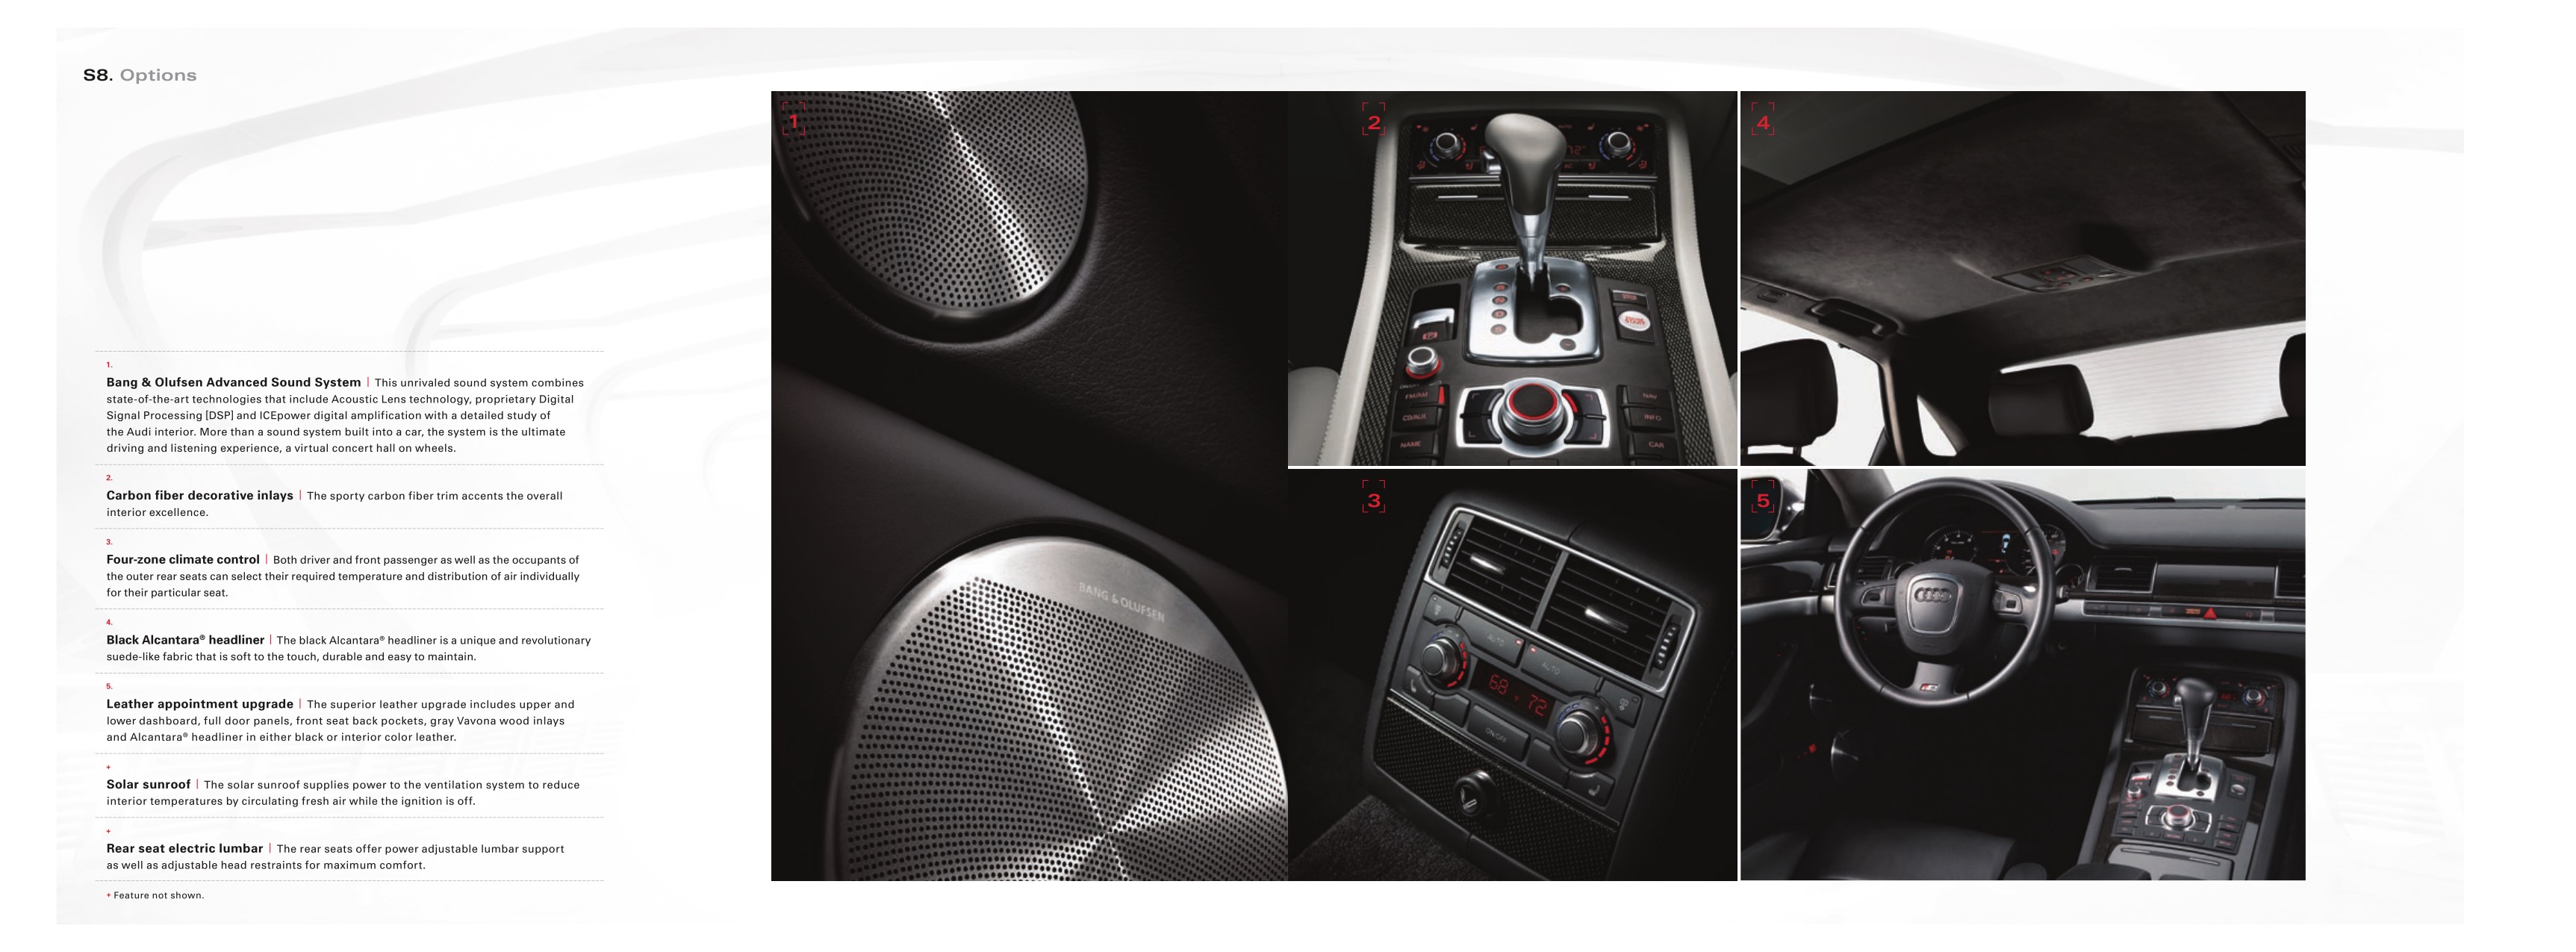 2009 Audi A8 Brochure Page 2